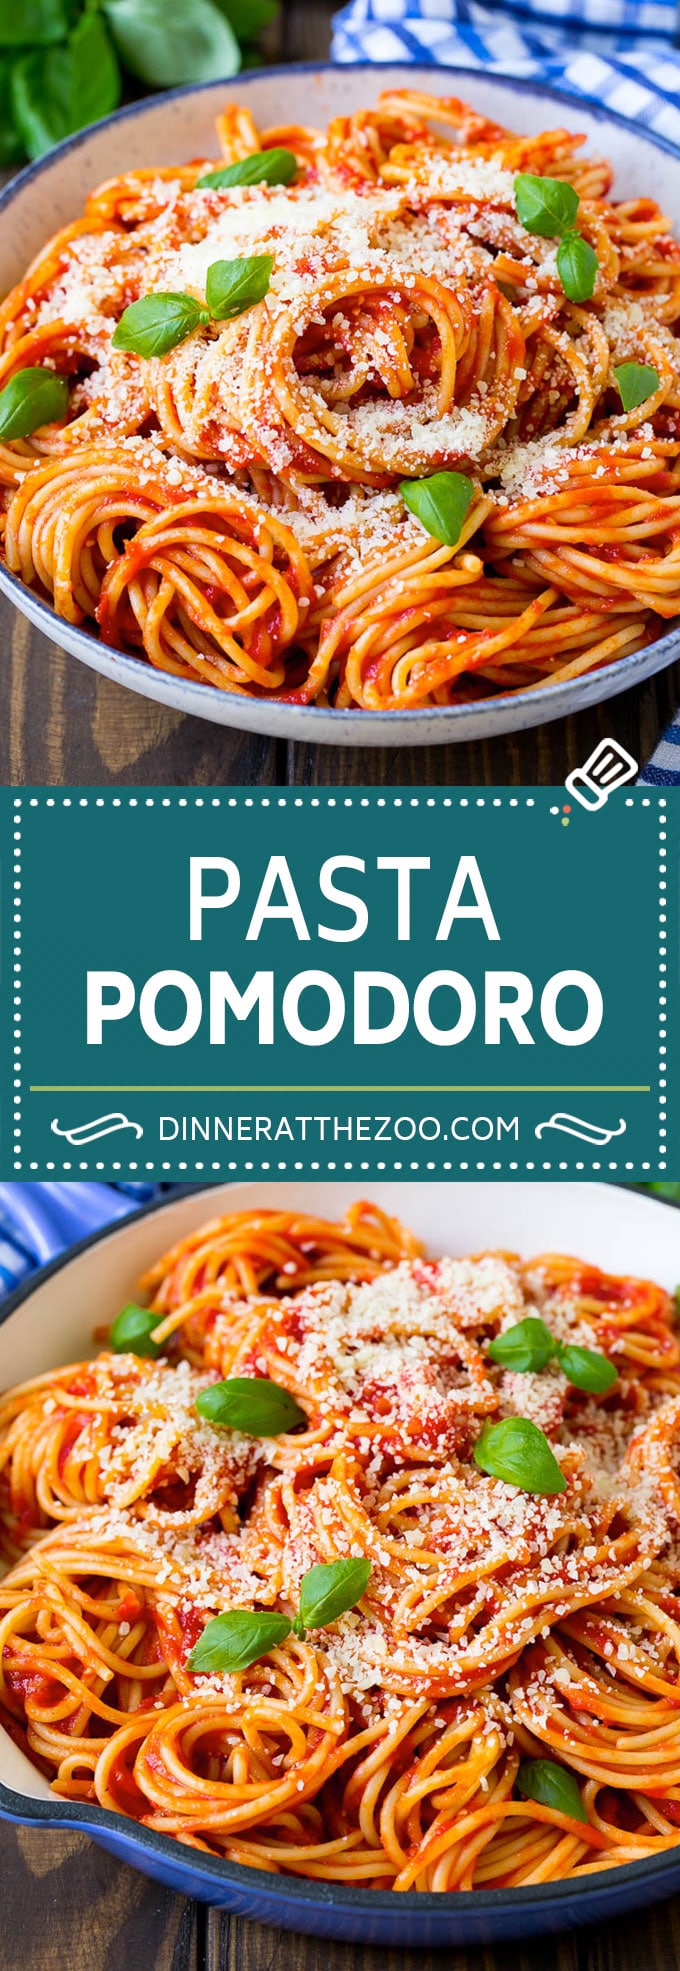 Receta de pasta de tomate |  Receta de espaguetis |  Salsa de tomate casera # pasta # espaguetis # tomates # basílica # comida italiana # cena #dinneratthezoo